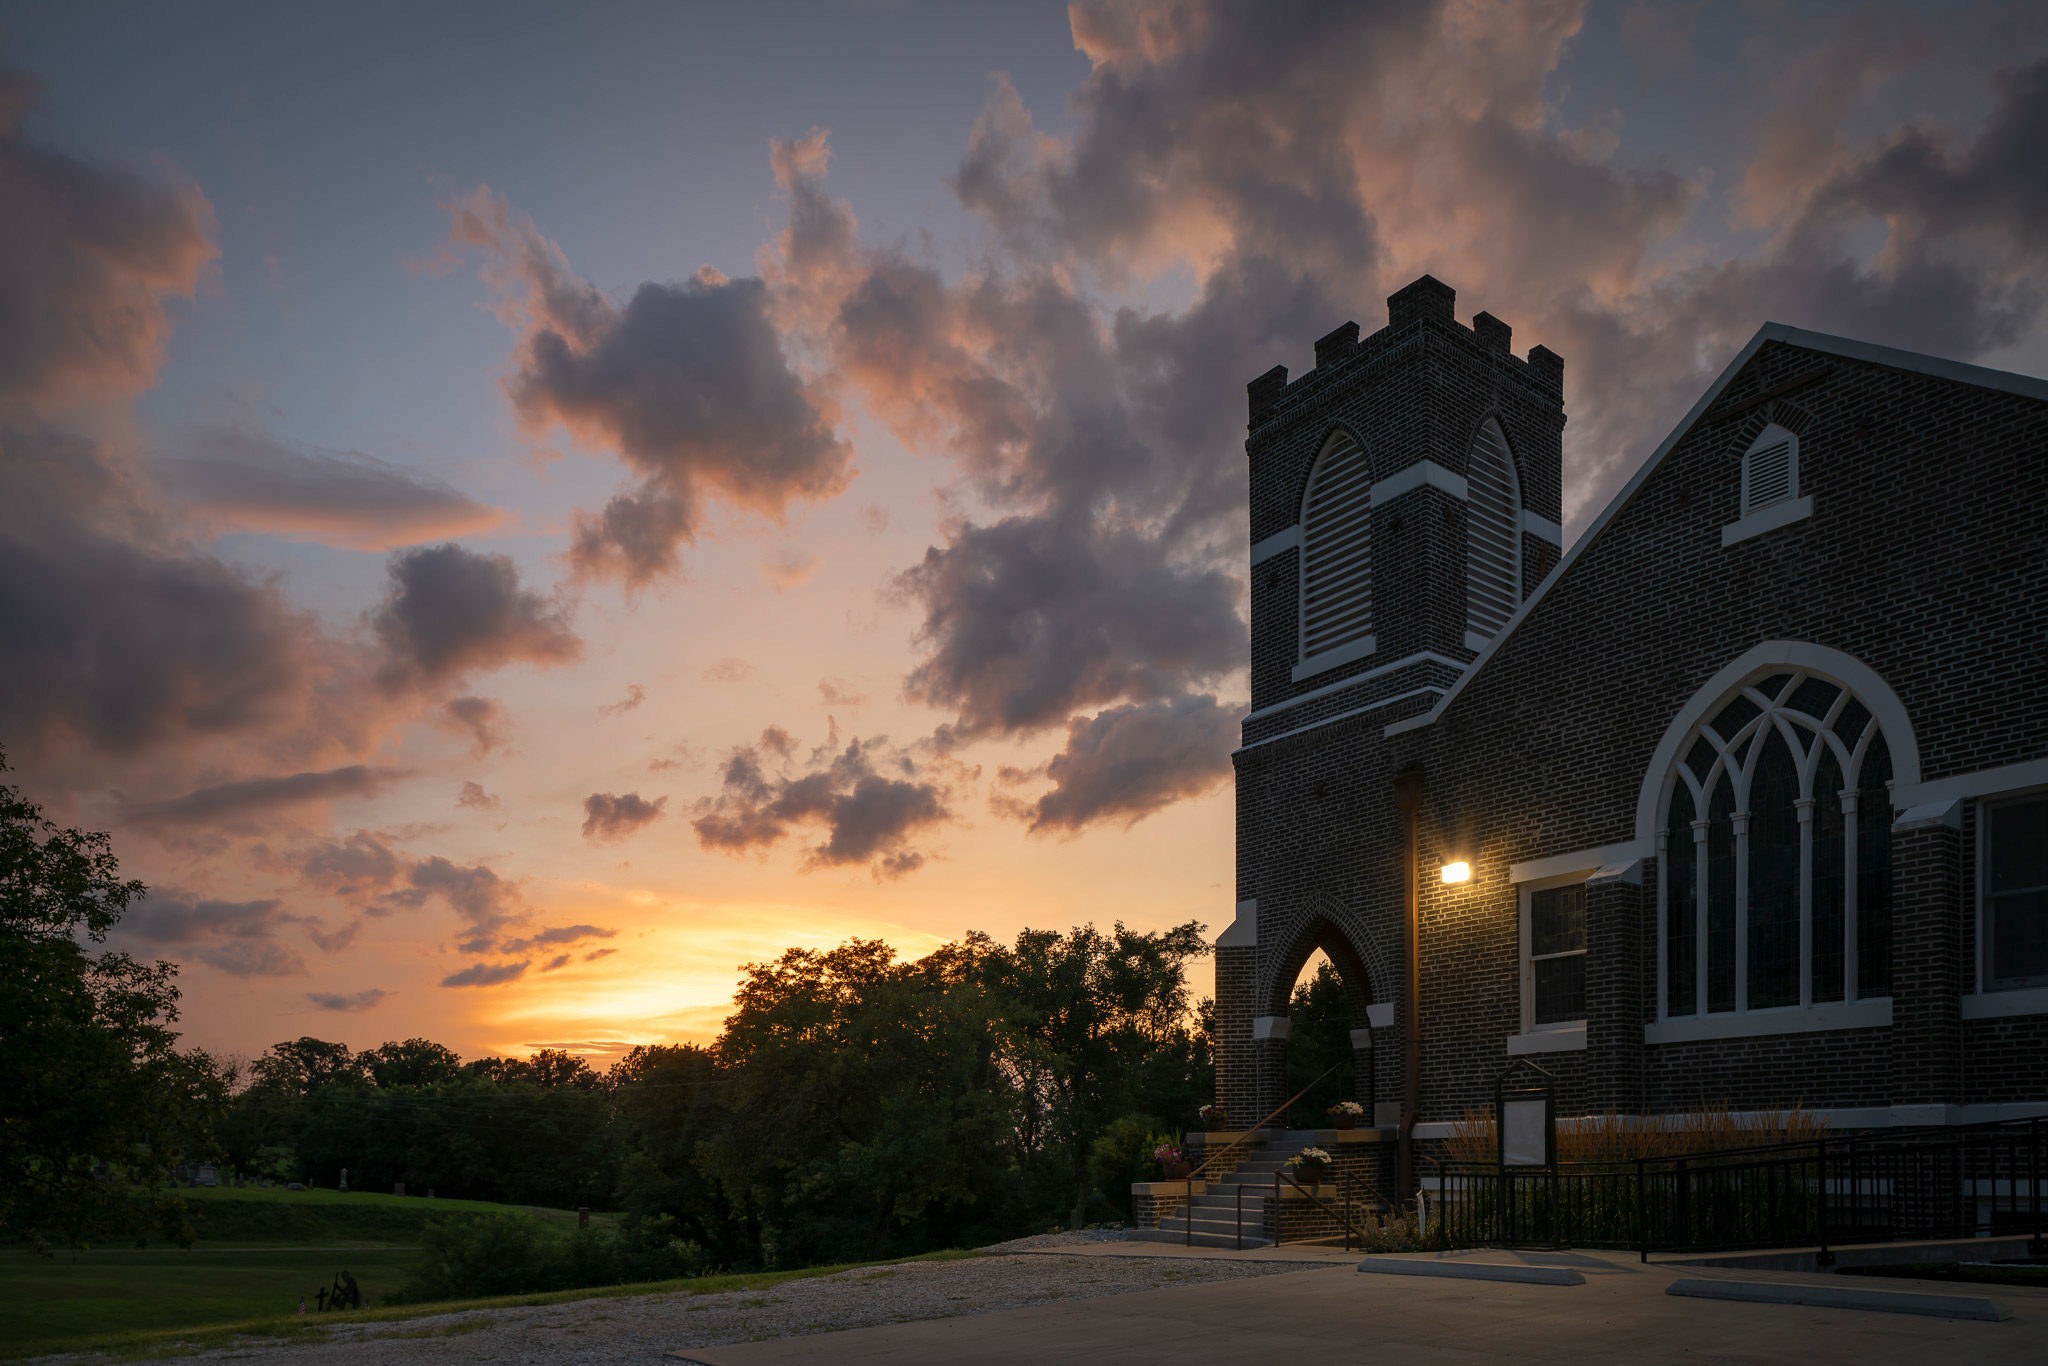 A photograph of a church at sunset.